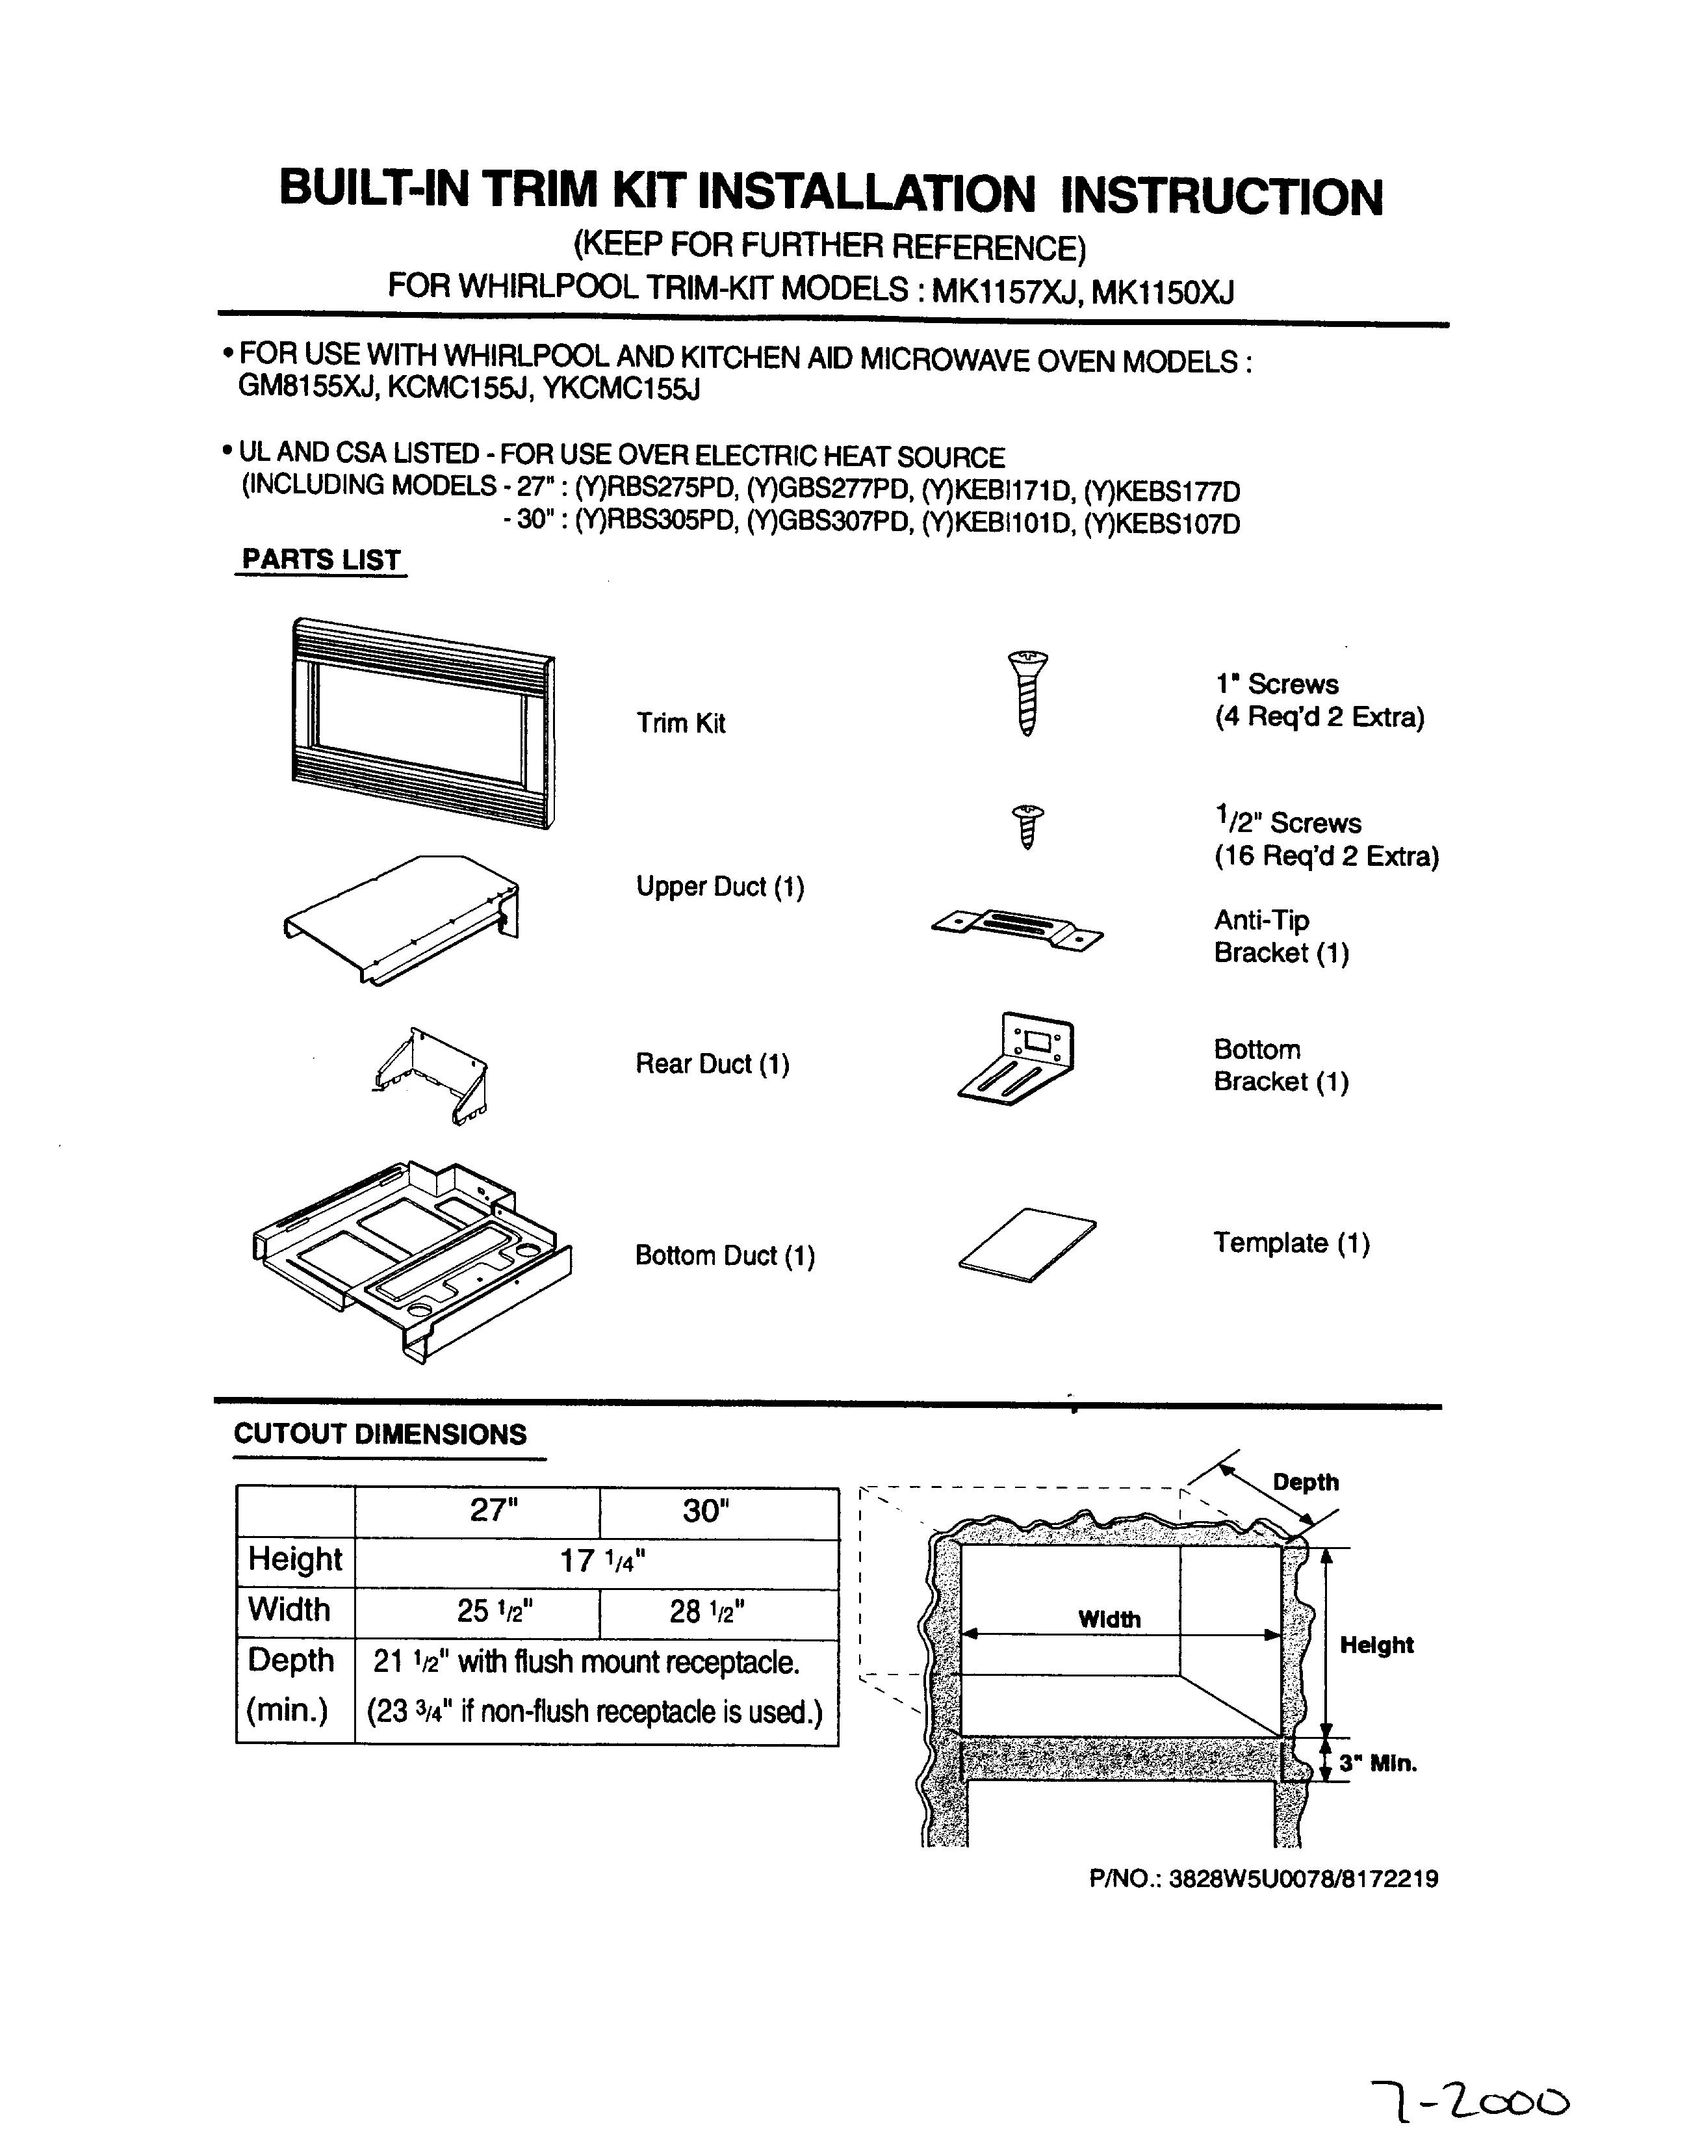 Whirlpool MK1157XJ Appliance Trim Kit User Manual